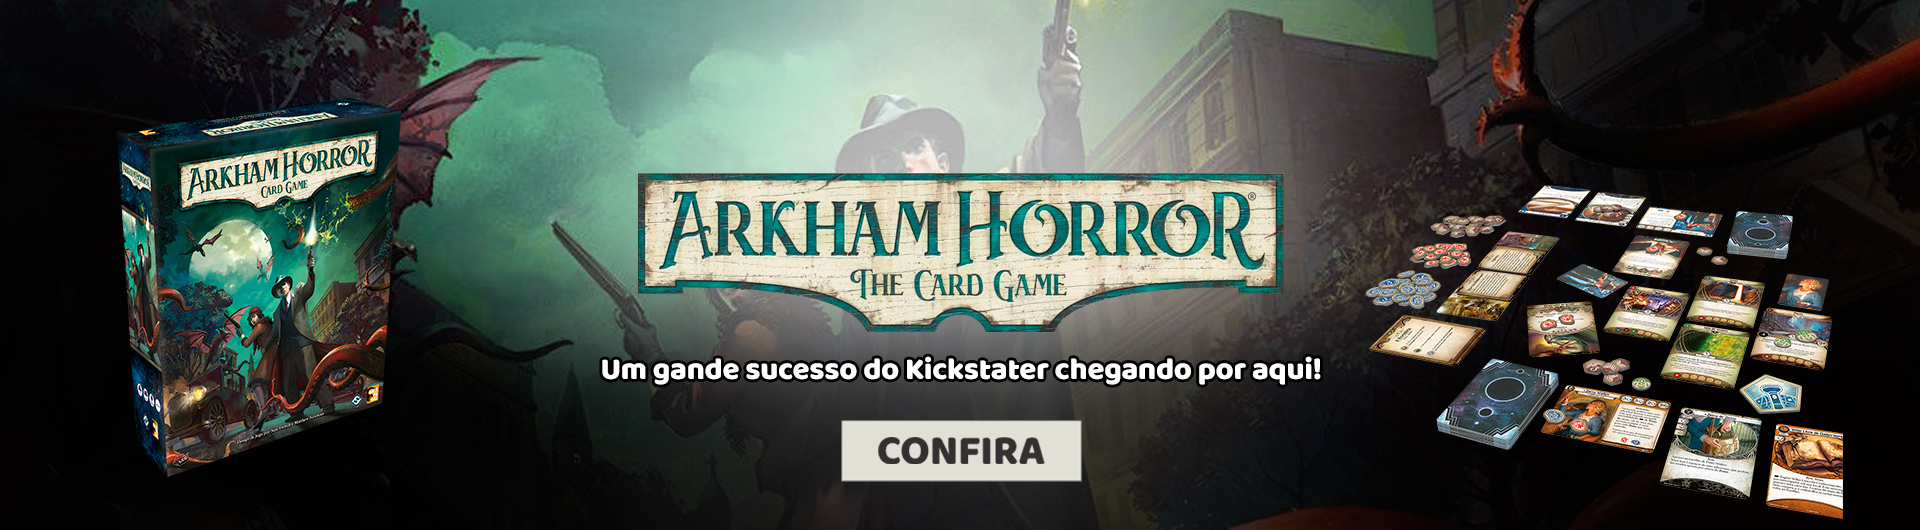 arkham horror card game